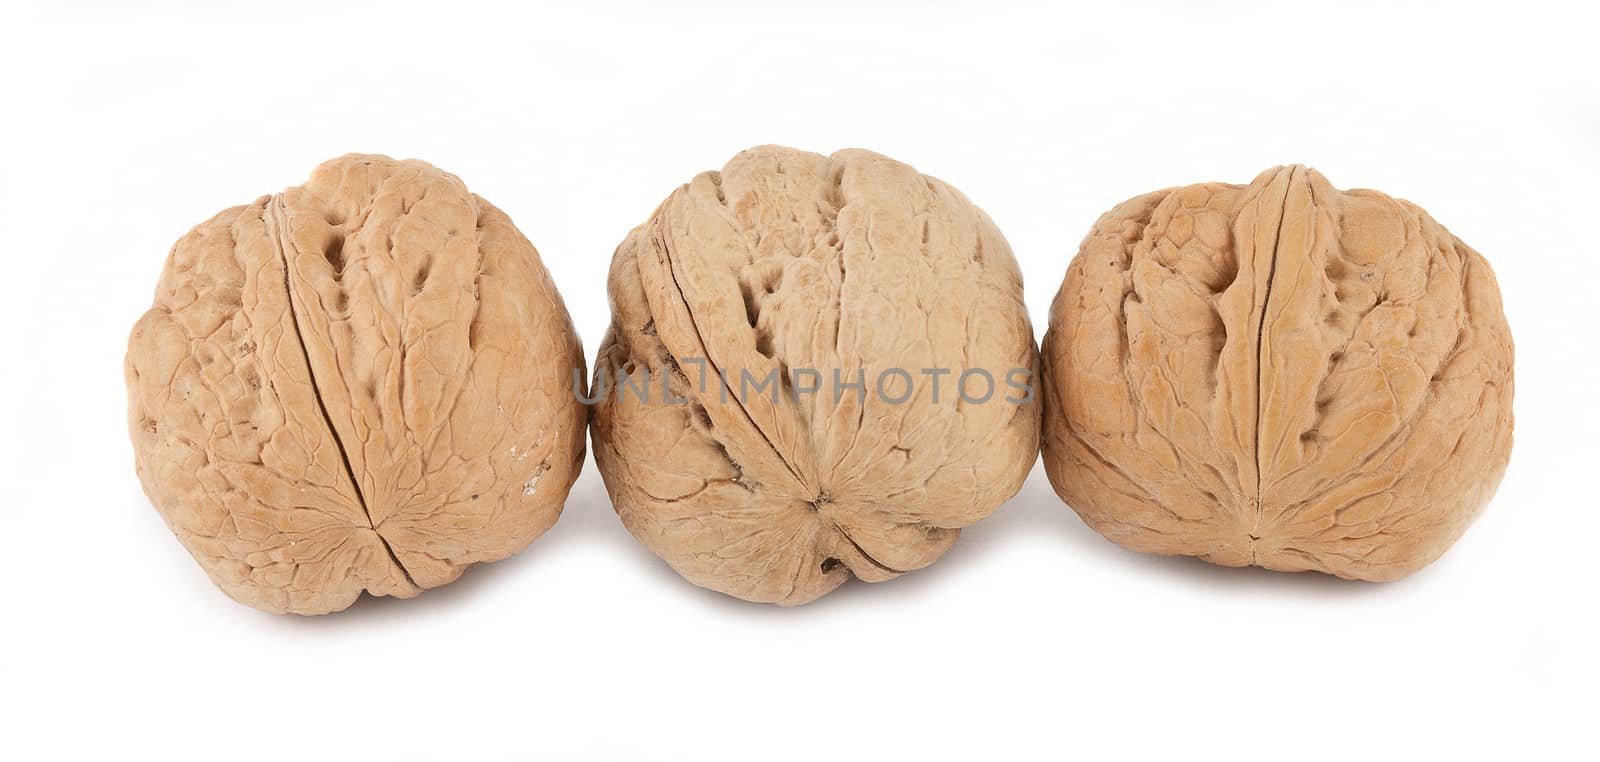 Circassian walnuts by marslander